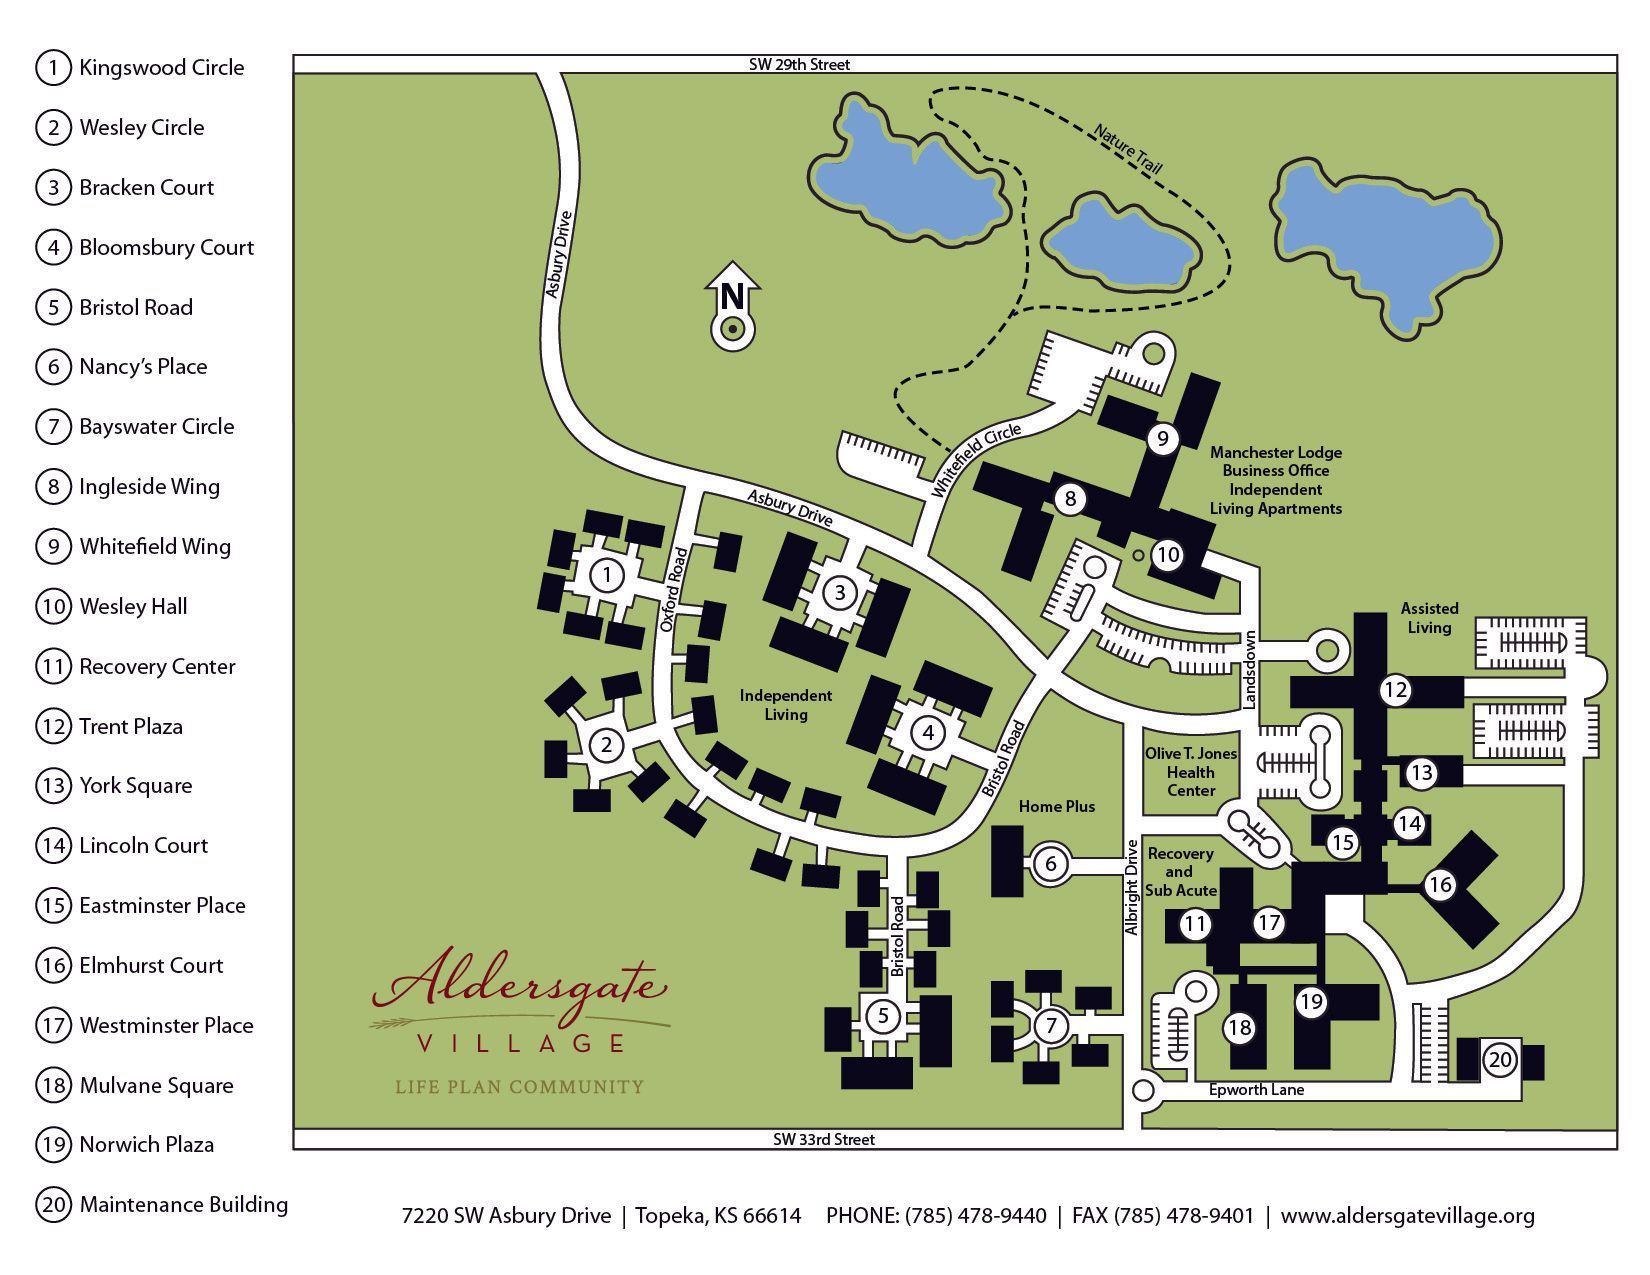 Aldersgate Village Campus Map